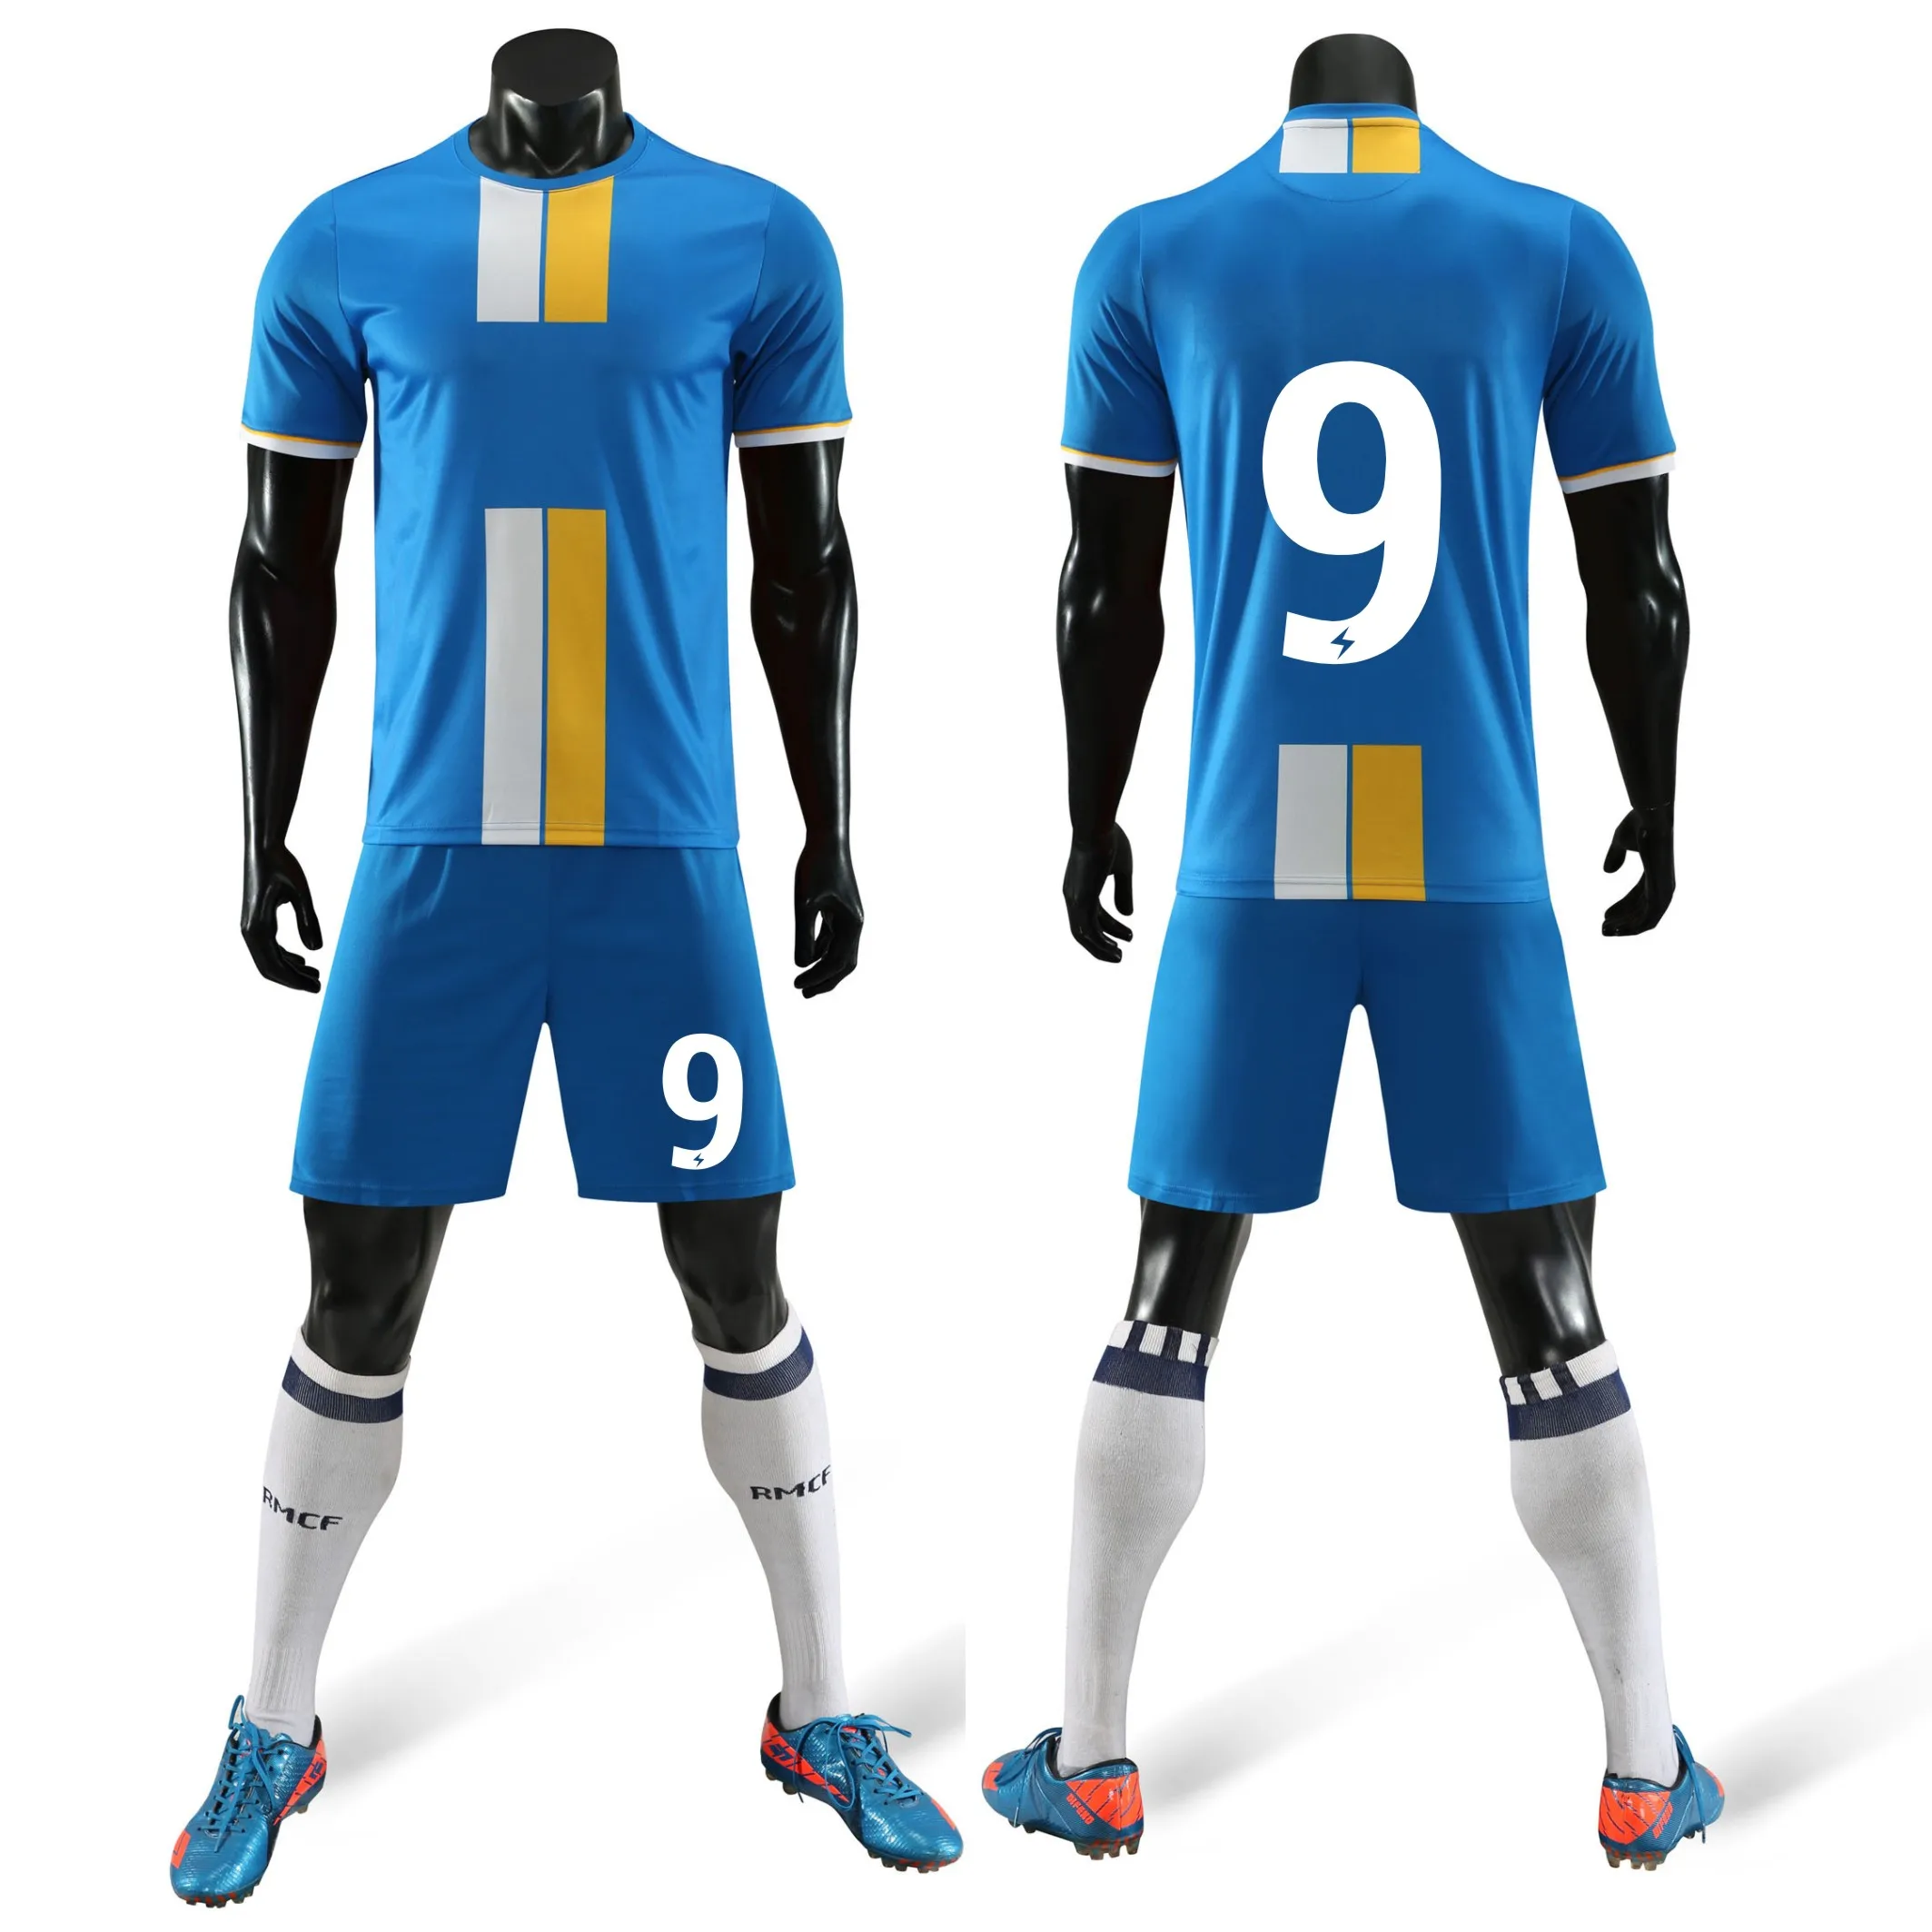 Ichnos adulte football soccer team kit uniforme shirt short bleu manches longues